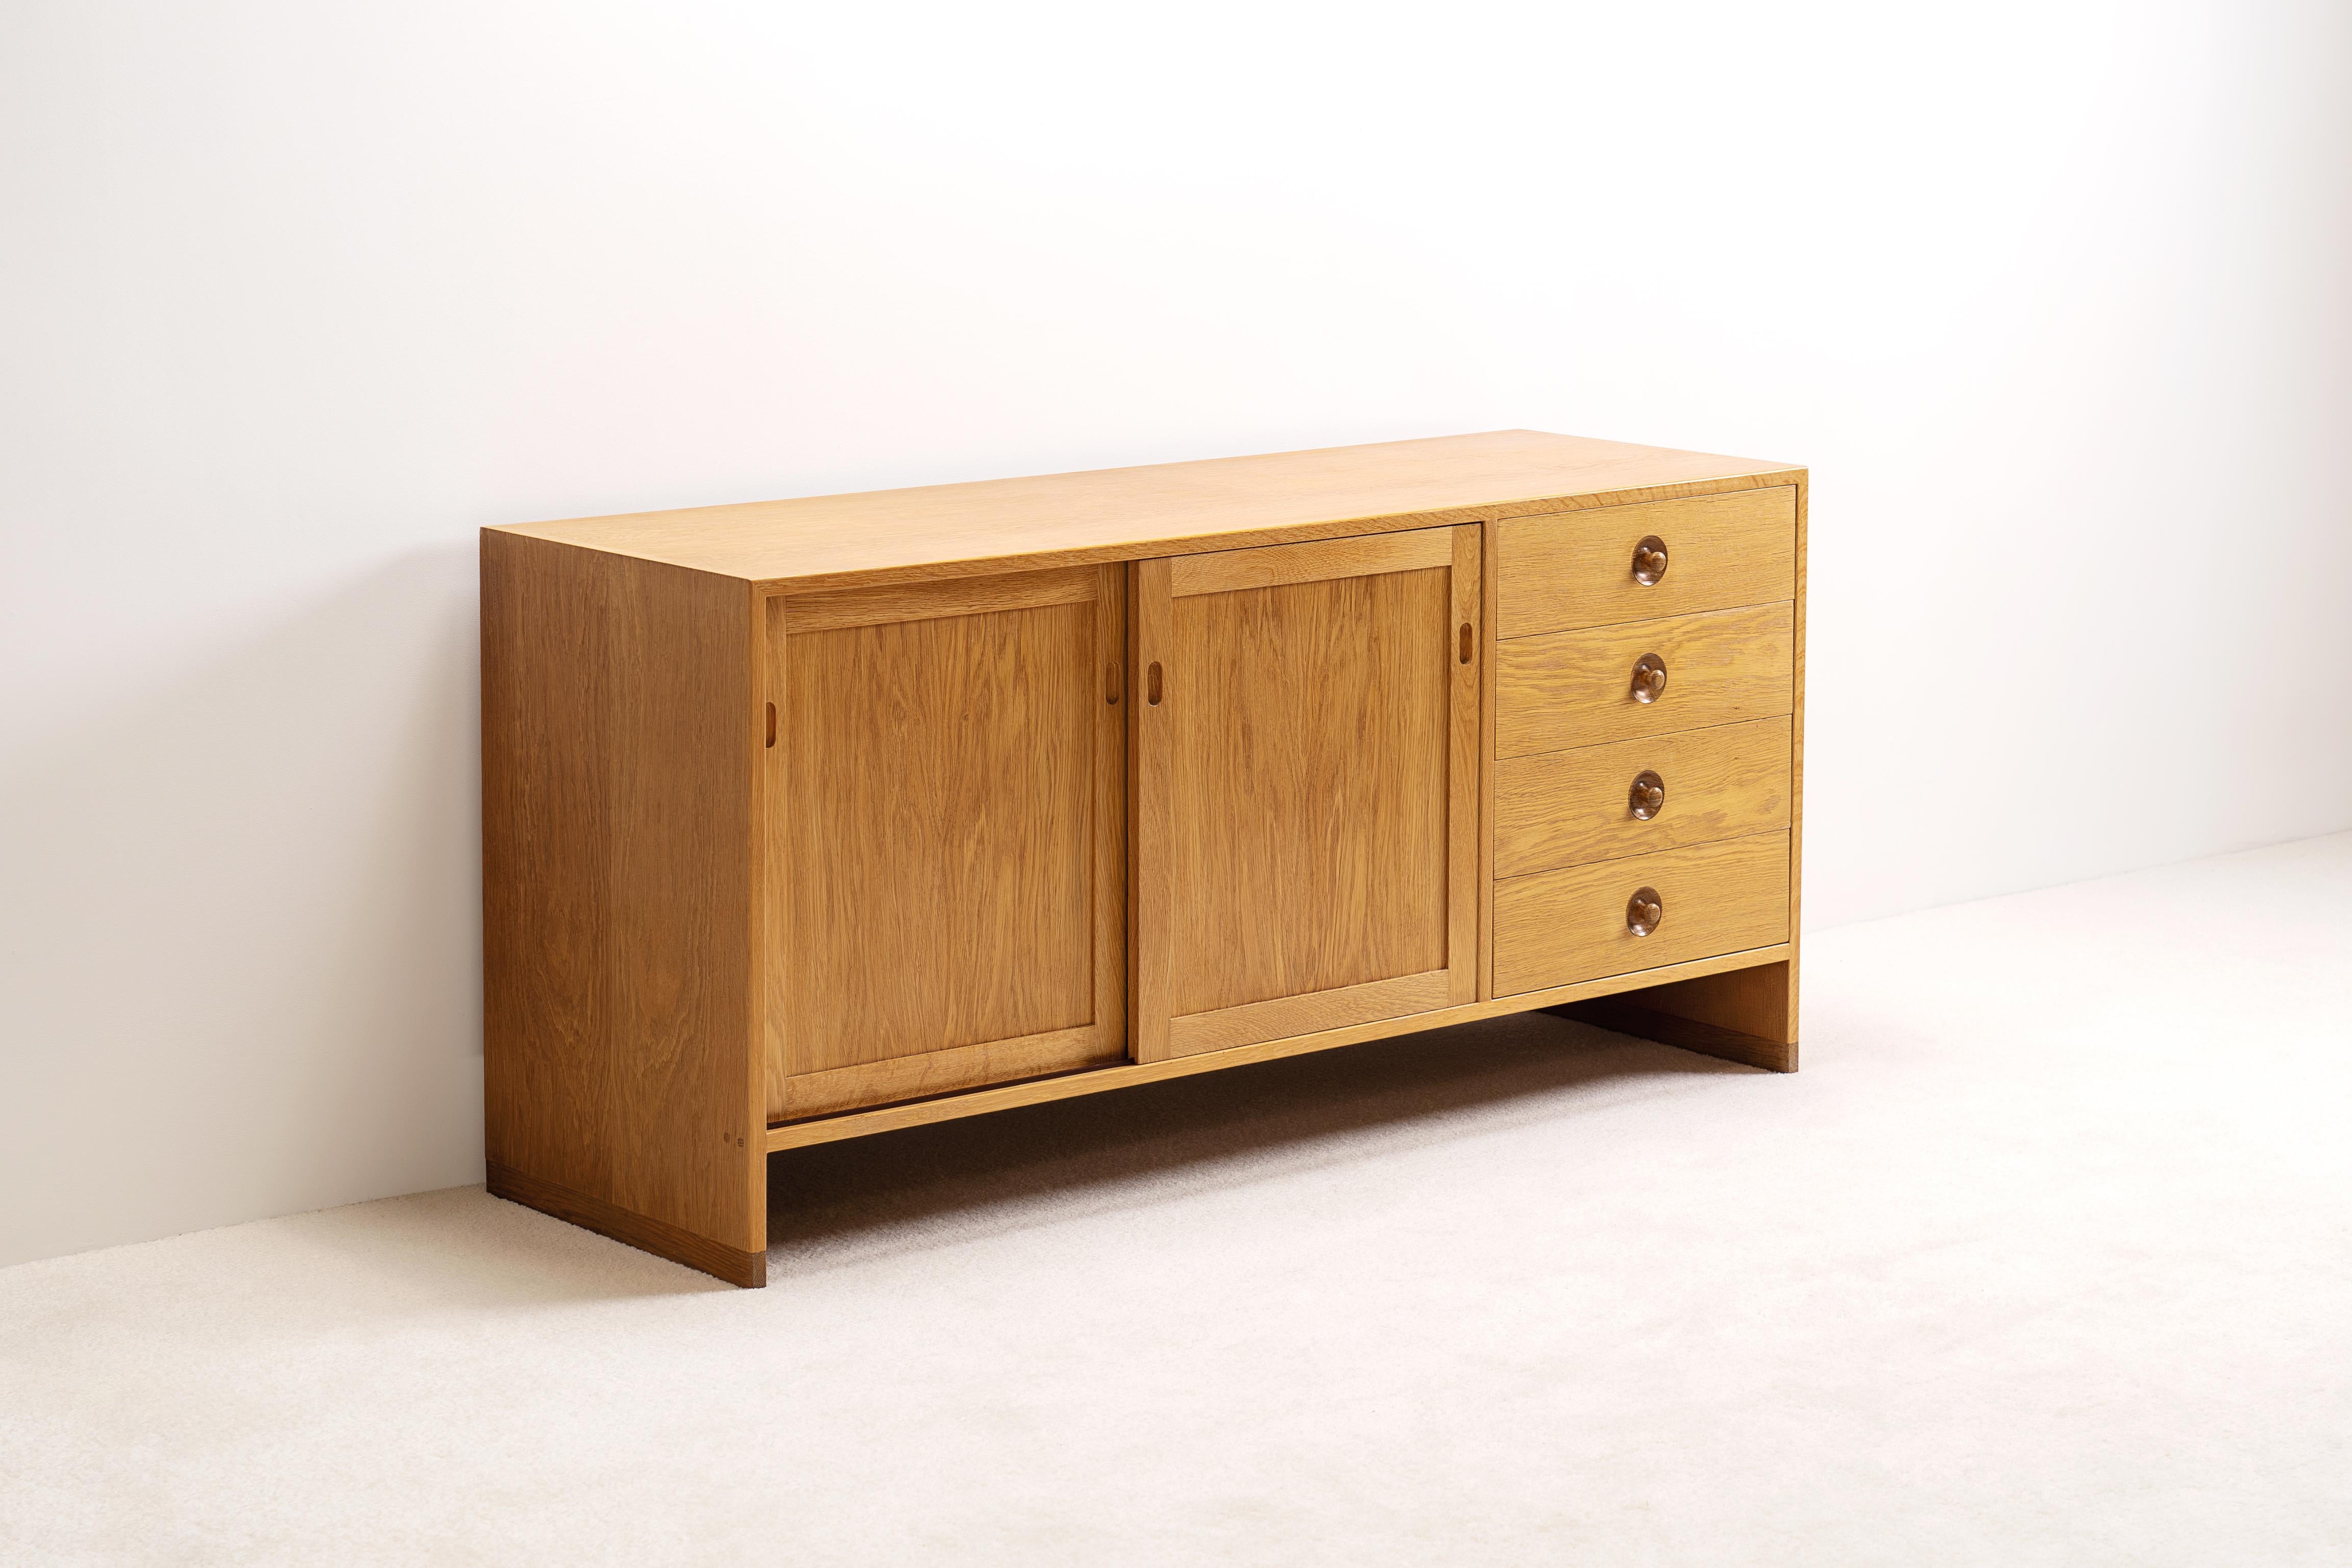 Elegant Oak sideboard / Cabinet model 'RY100' designed by Hans J. Wegner for 